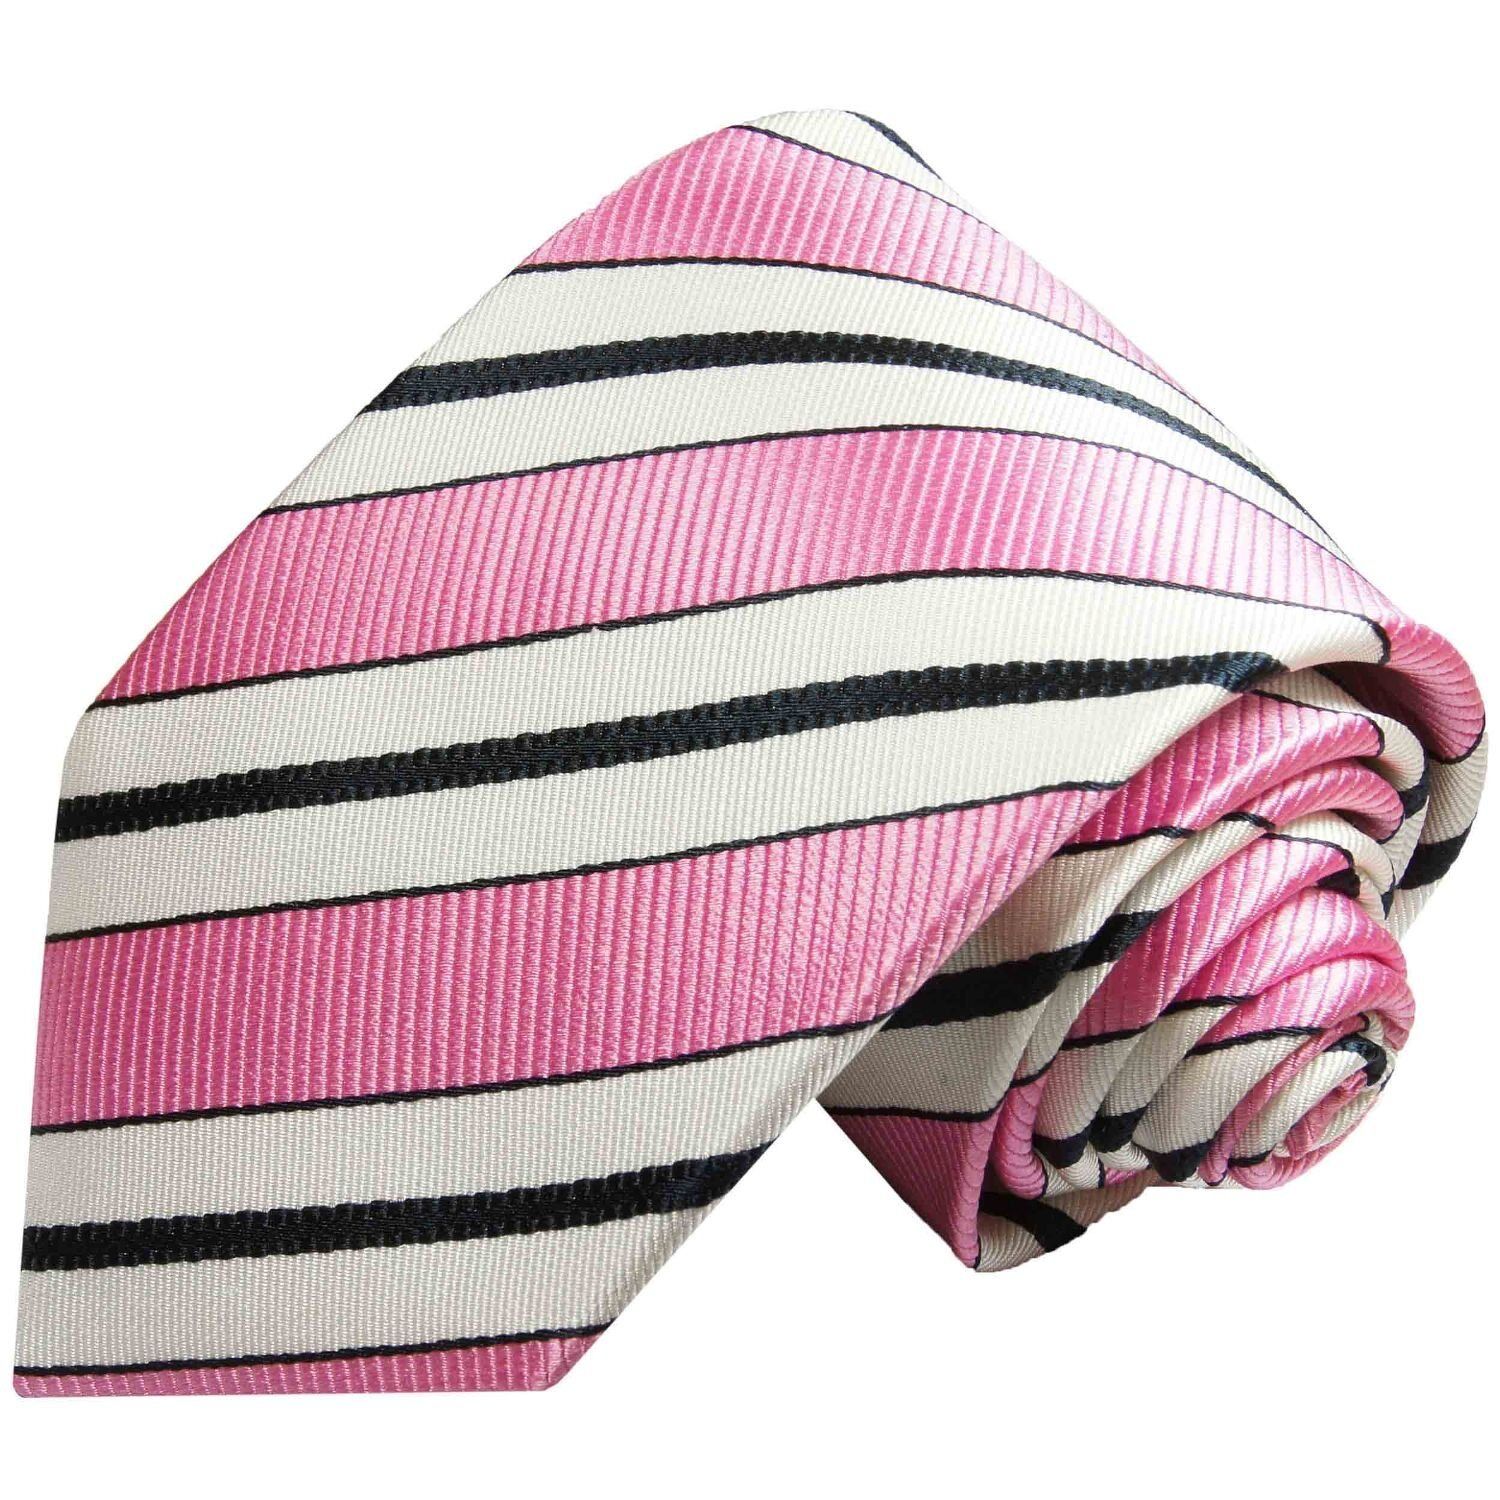 Paul Malone Krawatte »Herren Seidenkrawatte Schlips modern gestreift 100% Seide« Schmal (6cm), pink 110, pink